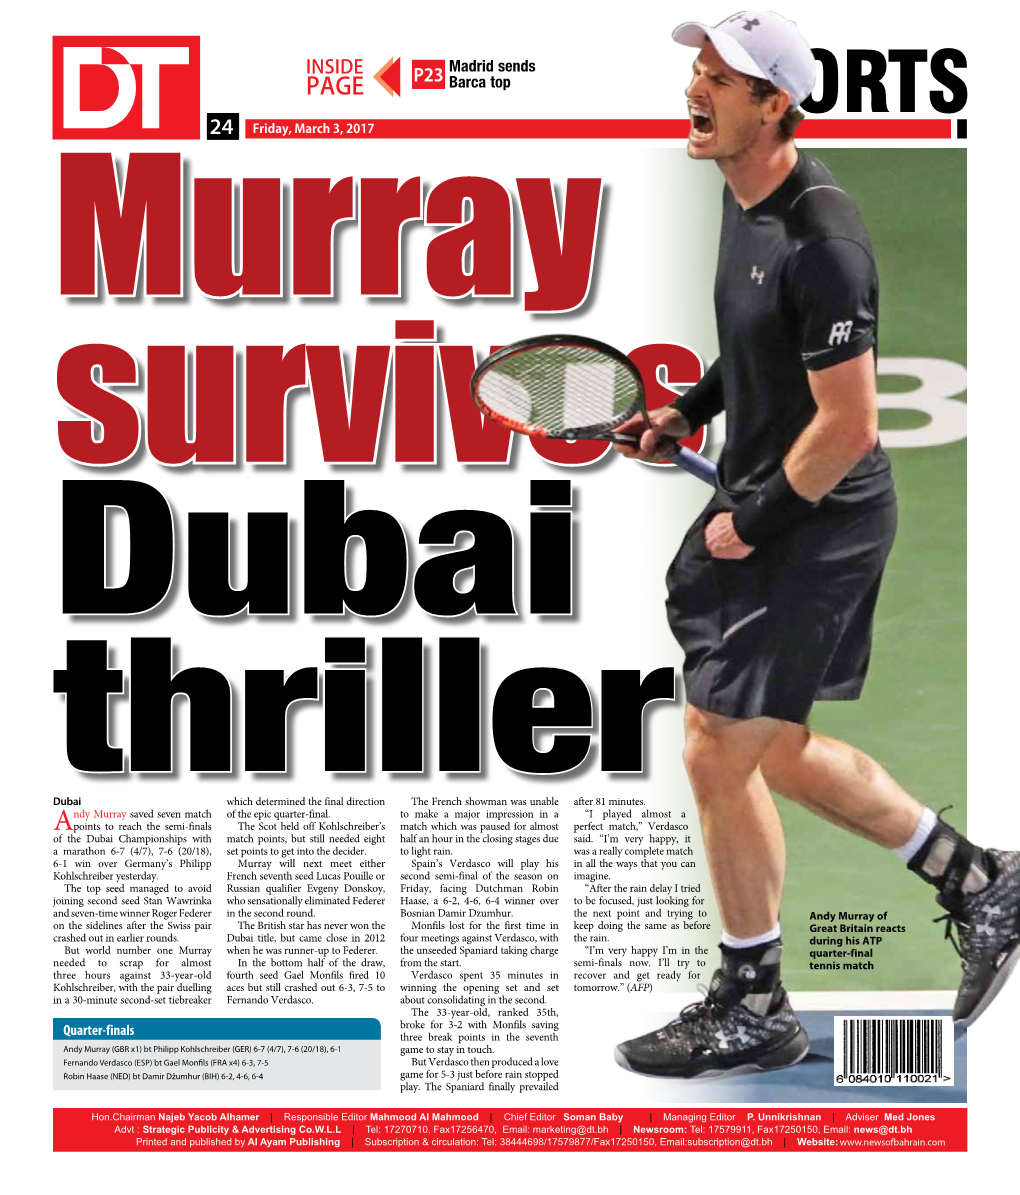 SPORTS 2424 Friday, March 3, 2017 Murray Survives Dubai